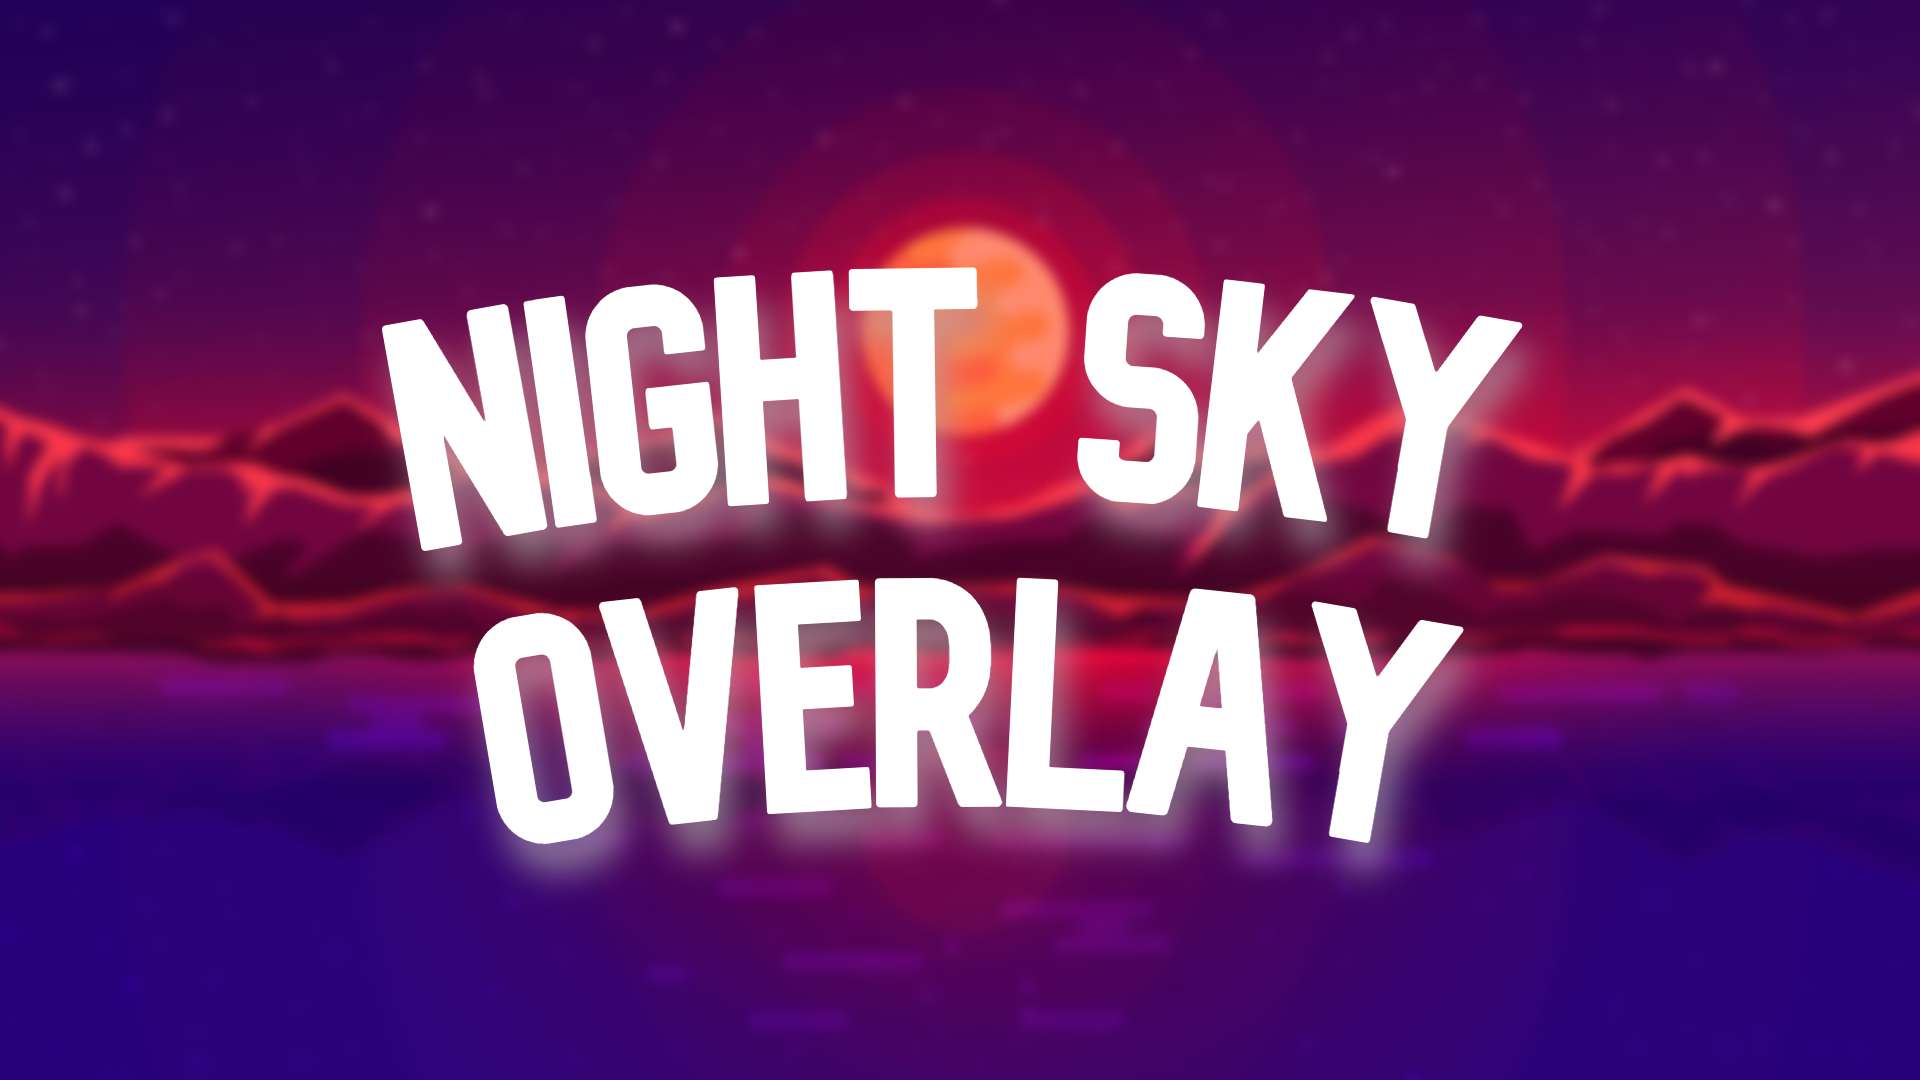 Night Sky Overlay #6 16 by rh56 on PvPRP